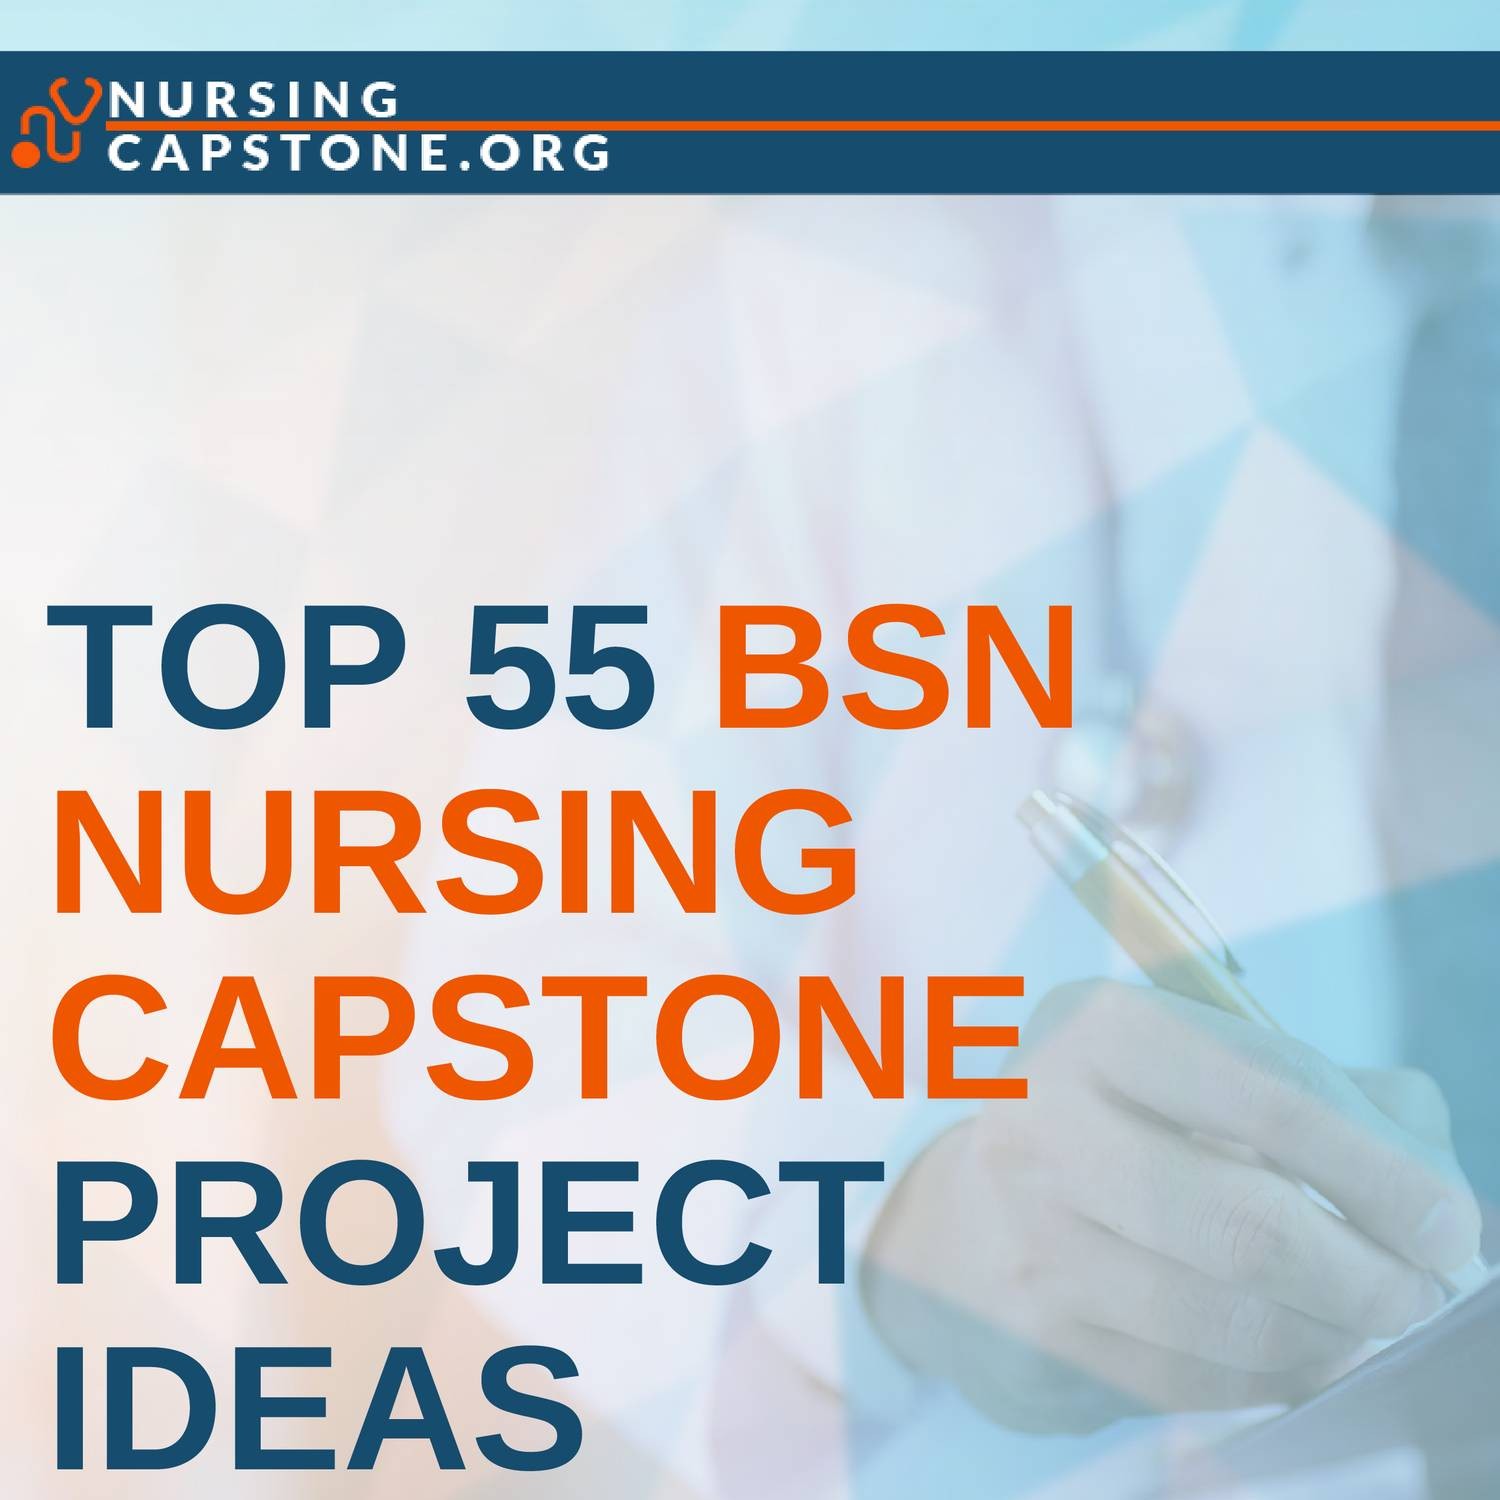 capstone project ideas for bsn program